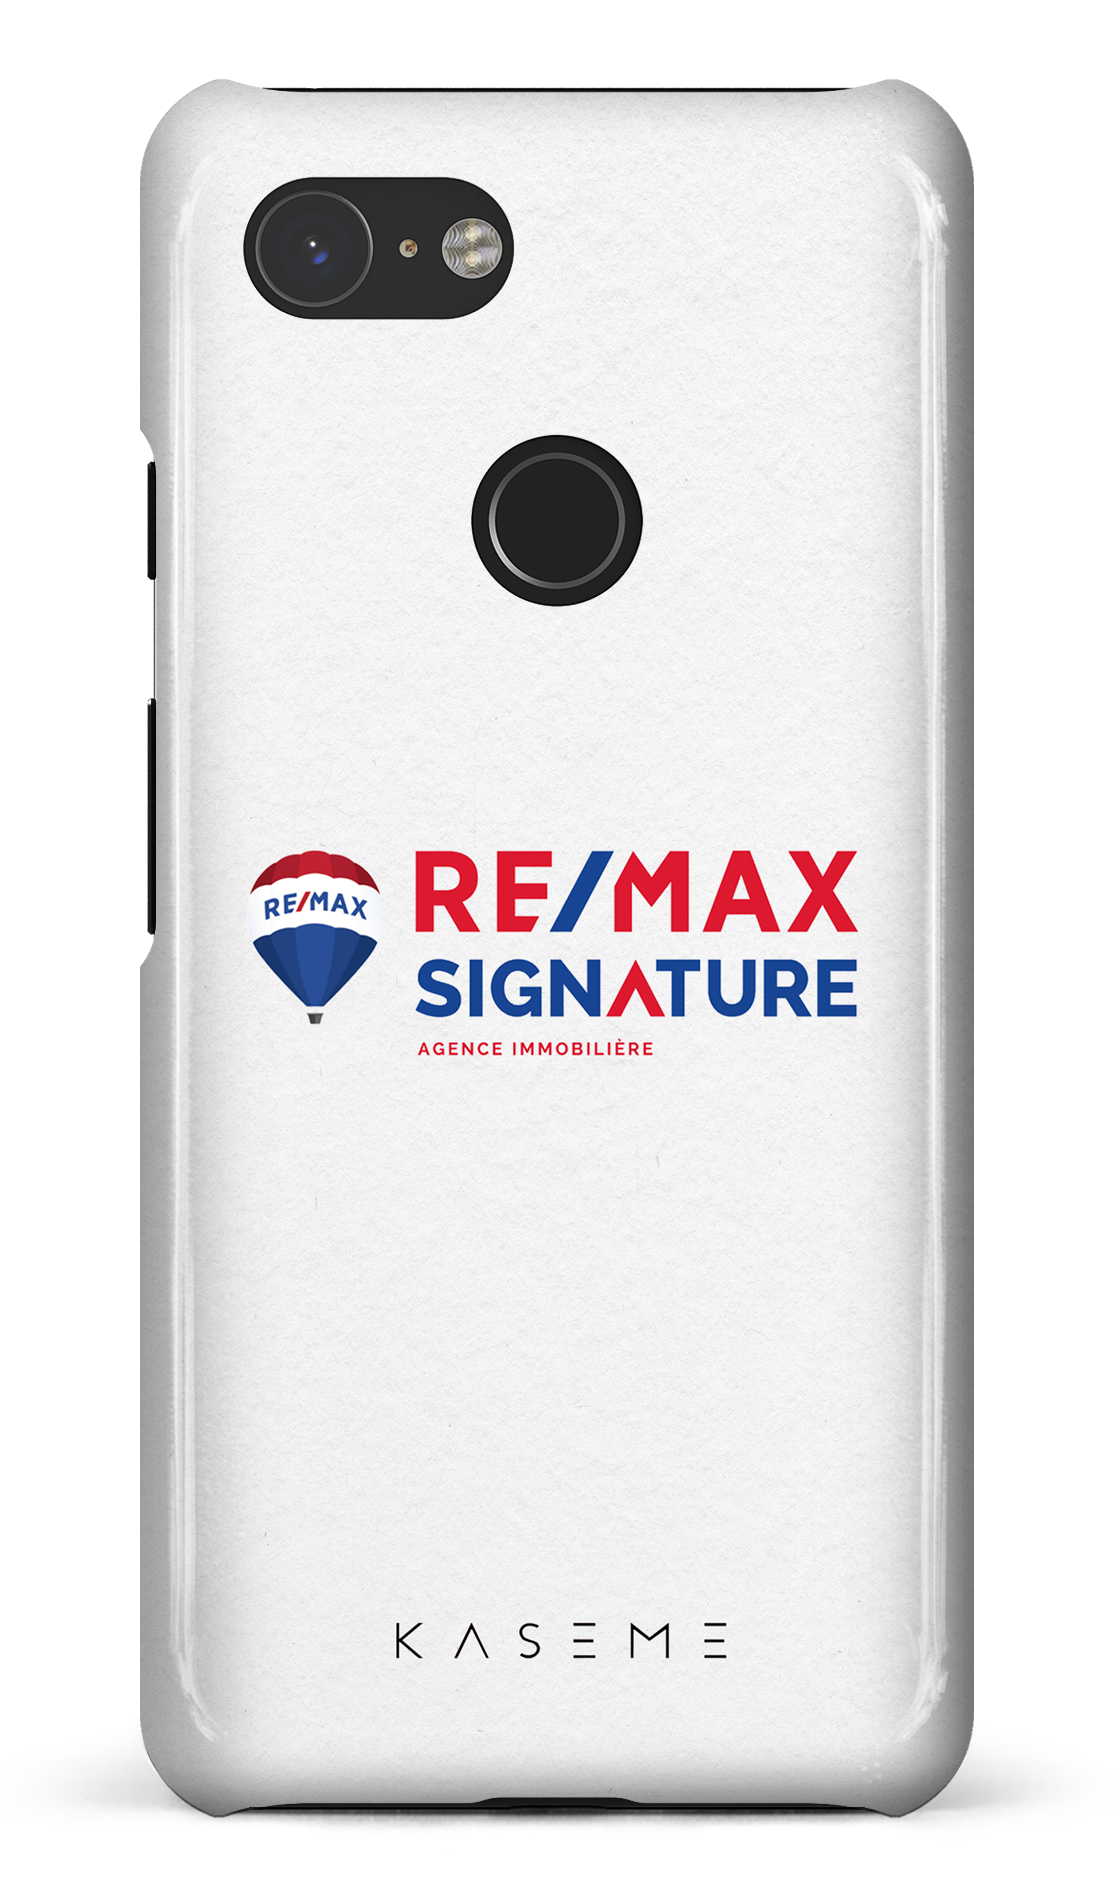 Remax Signature Blanc - Google Pixel 3